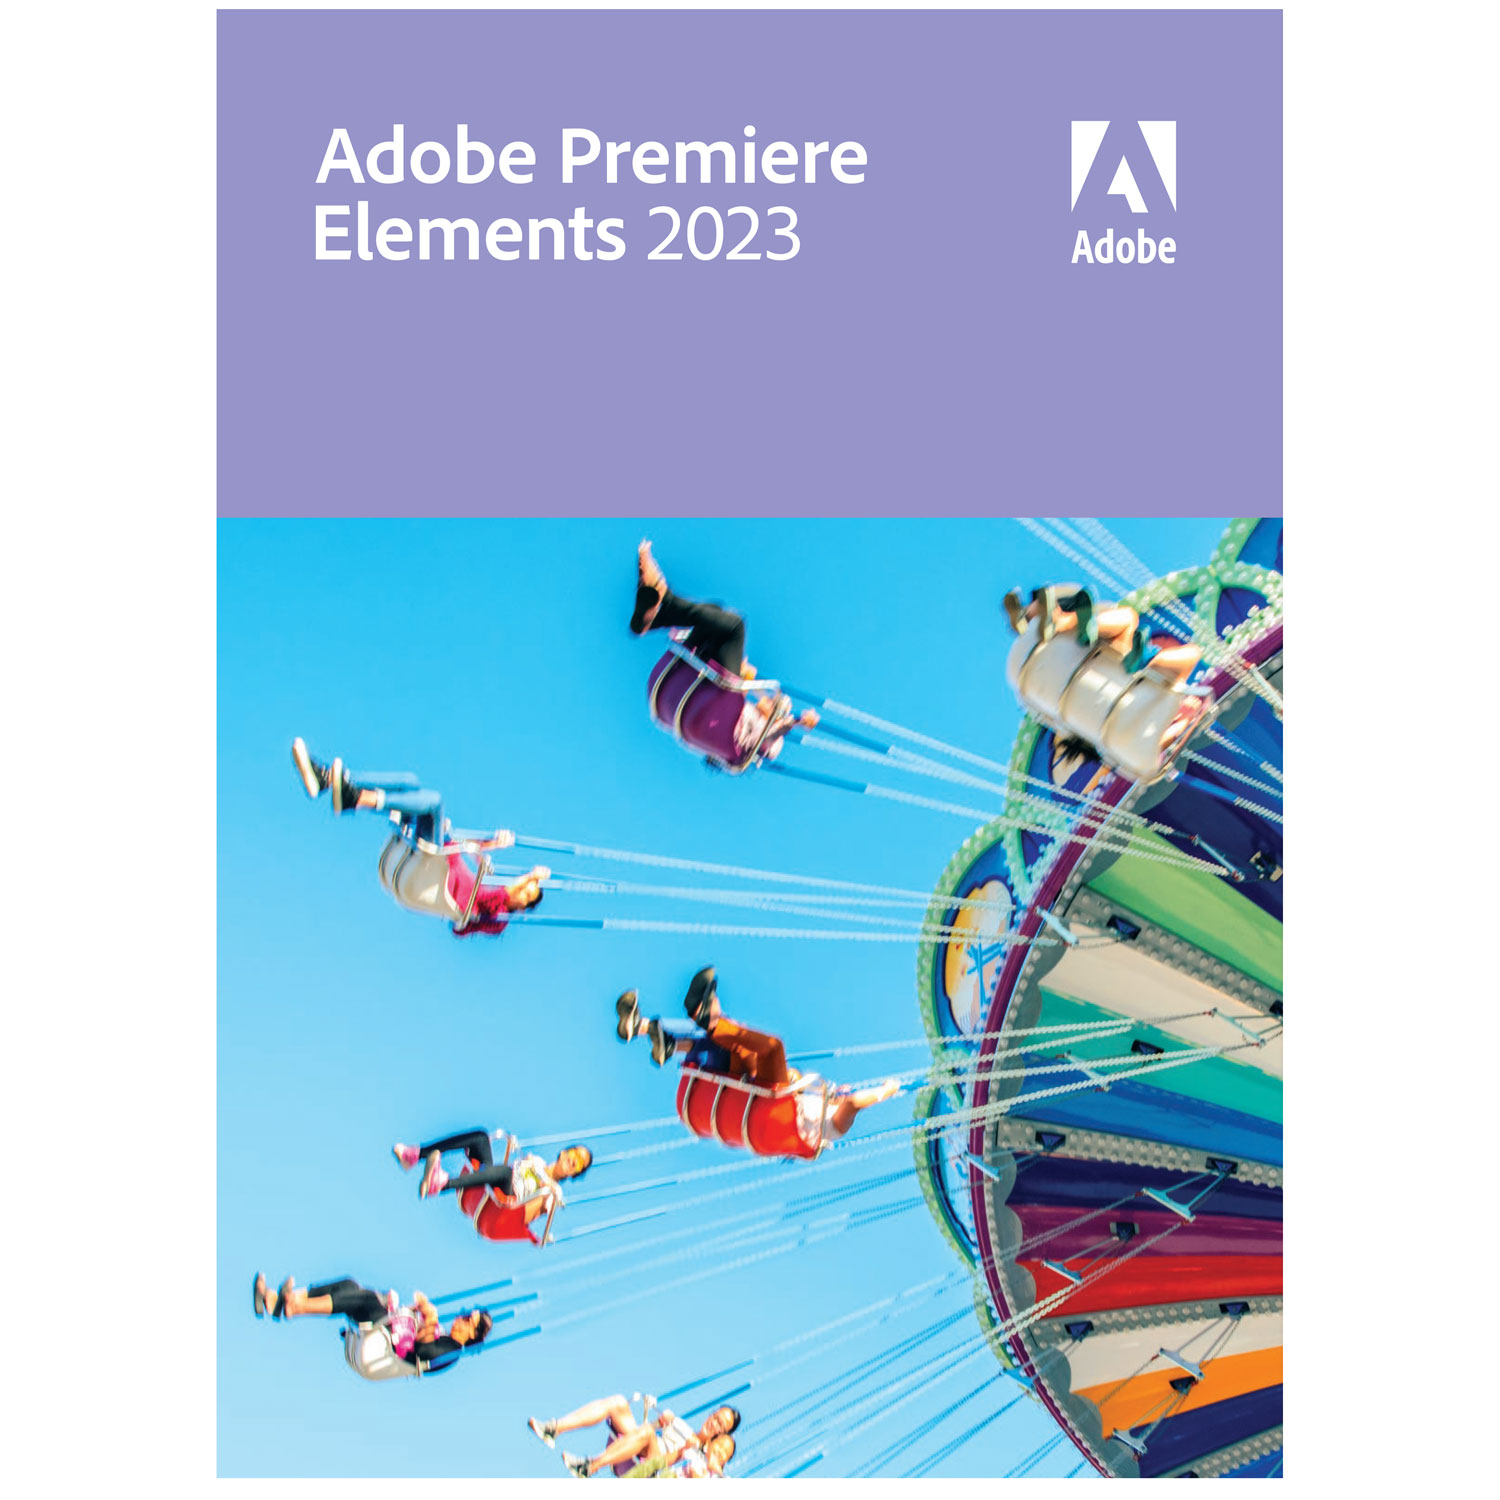 Adobe Premiere Elements 2023 (PC/Mac) - 1 User - English